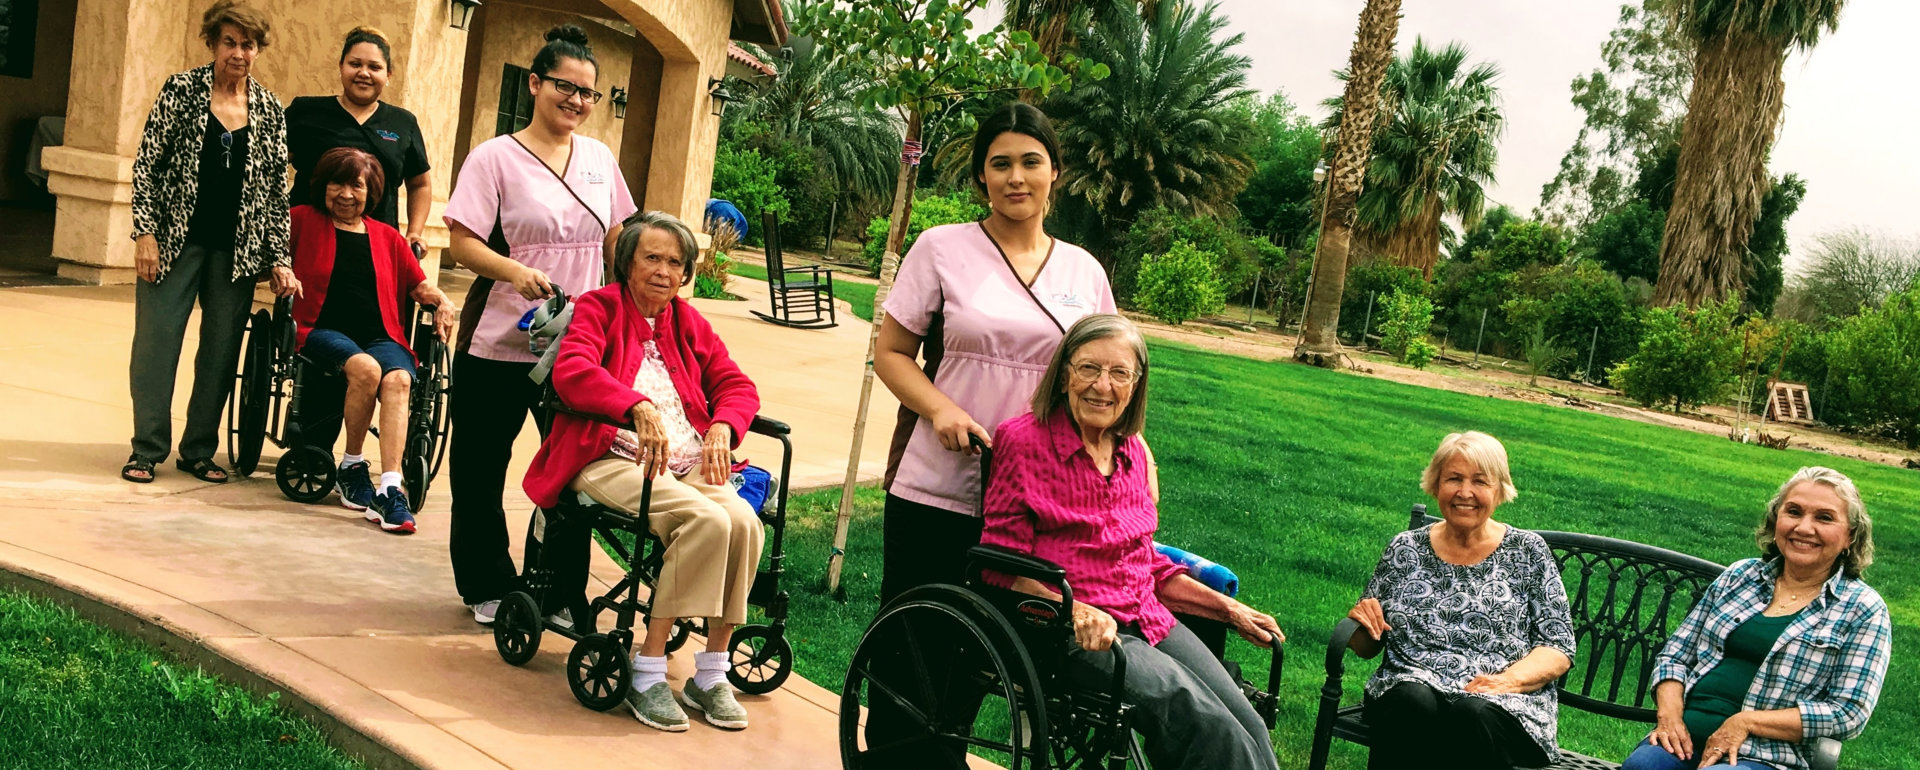 caregivers with senior patients